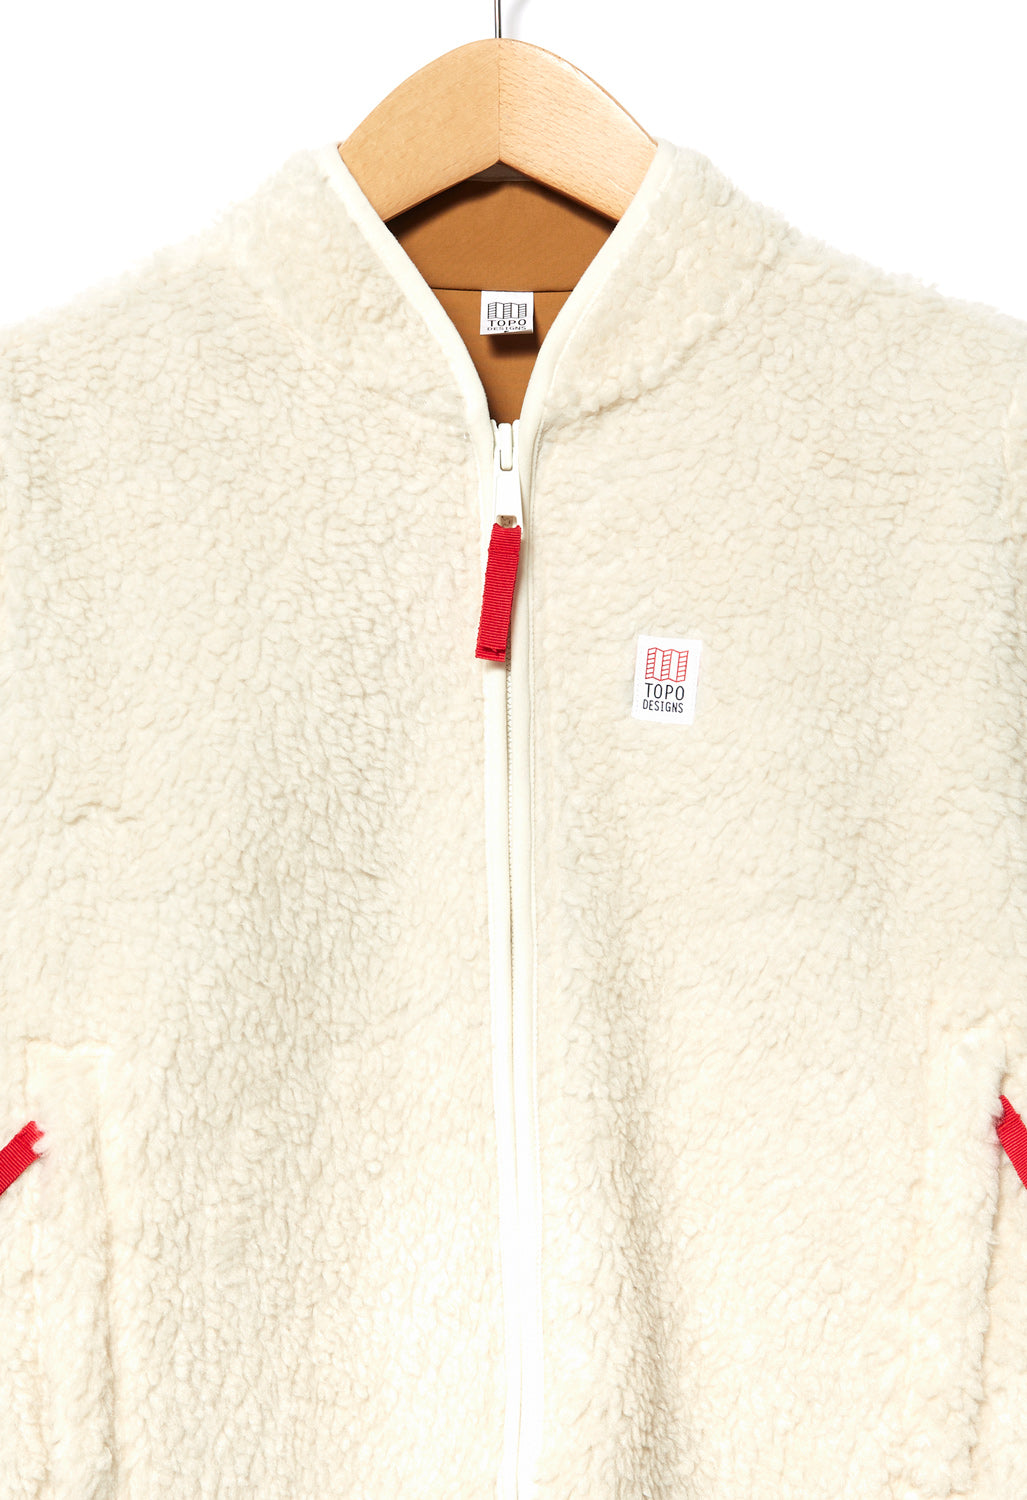 Topo Designs Women's Sherpa Jacket - Natural / Khaki